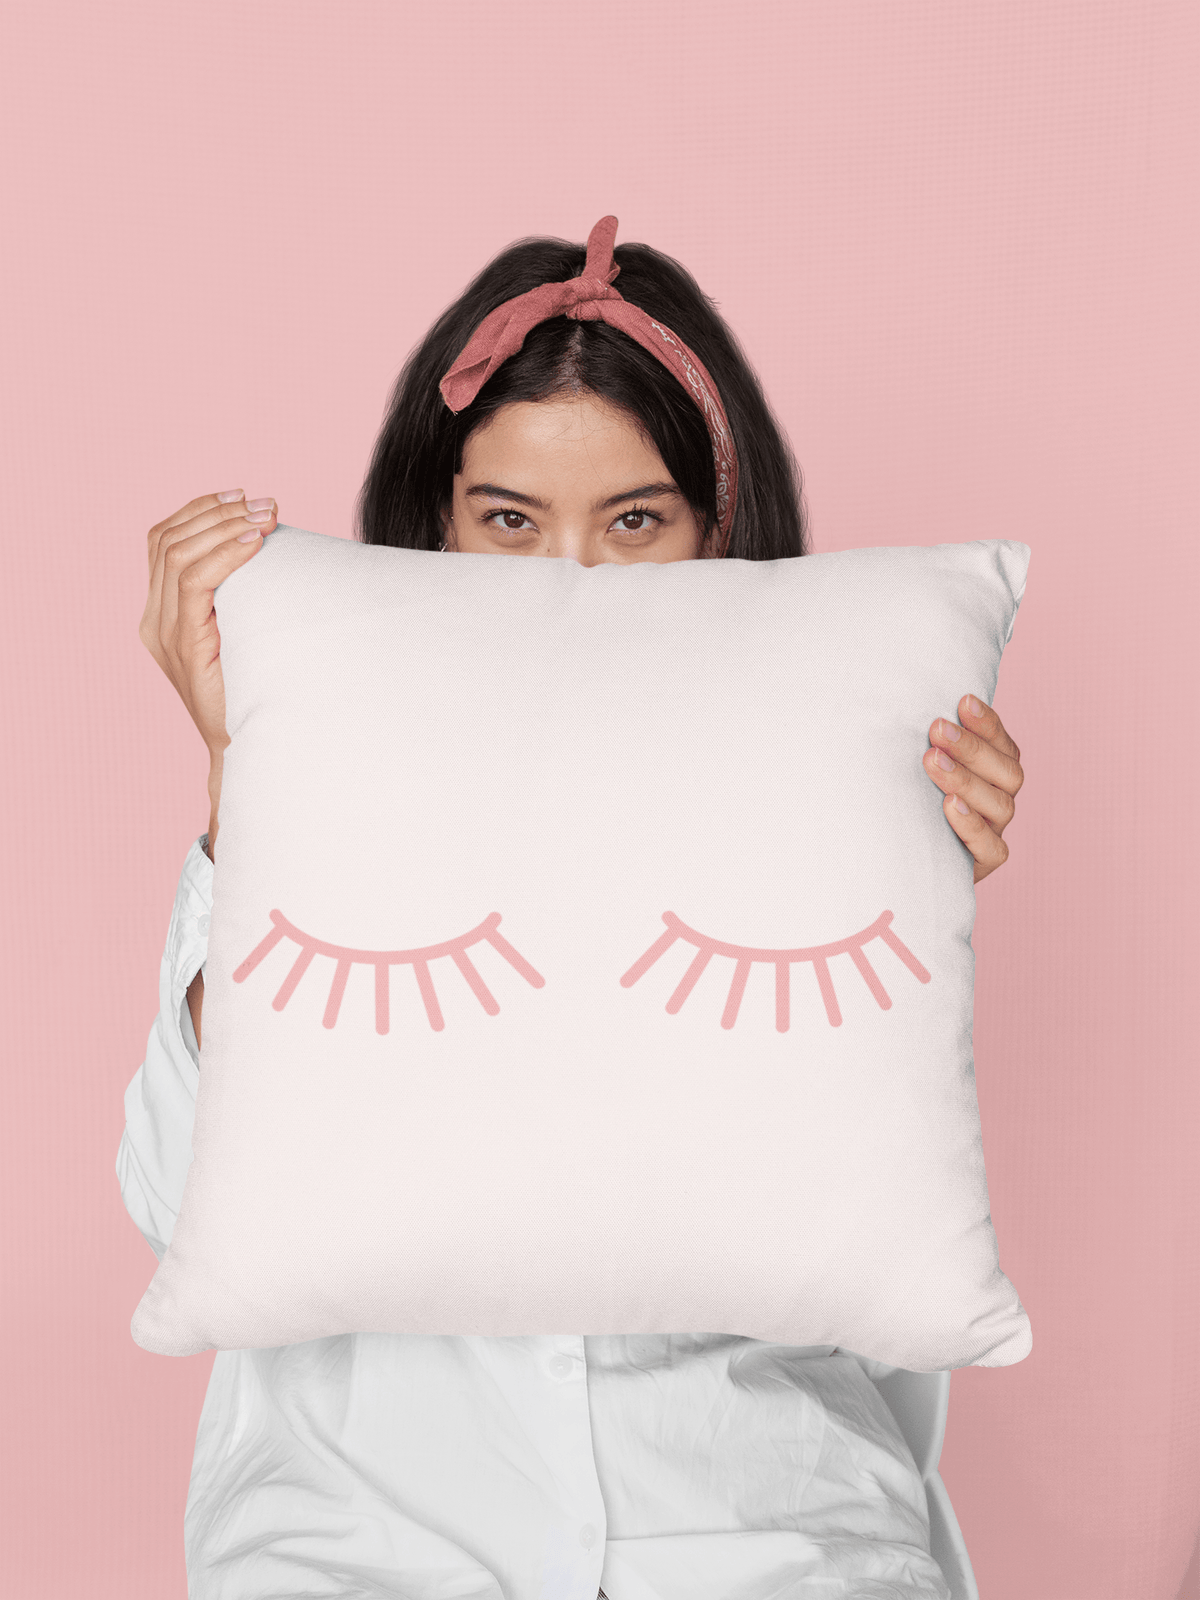 Pillows - Dorm Room Pillow - Pink Eyelashes